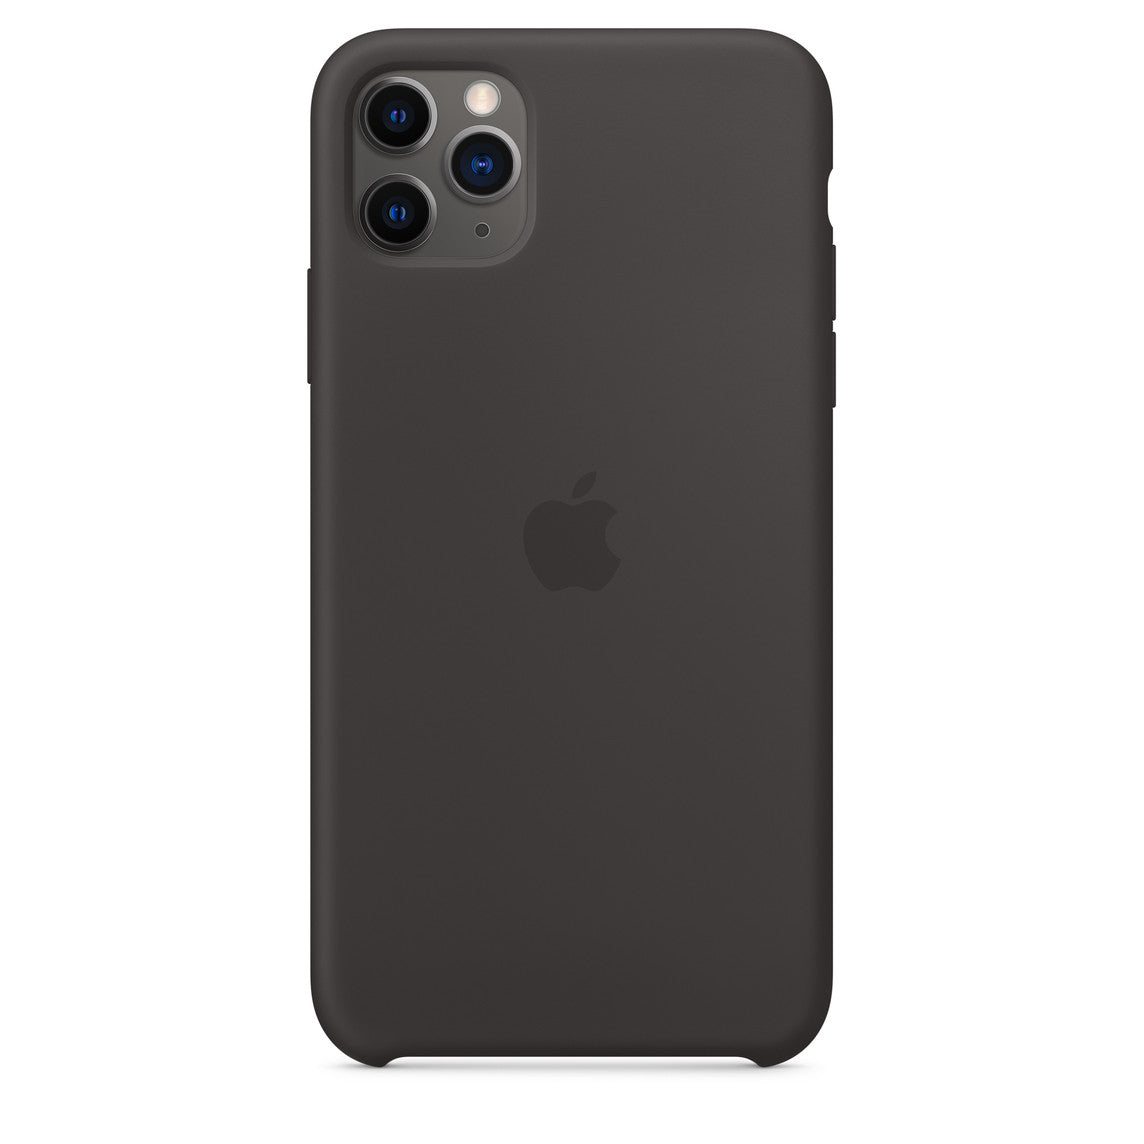 Apple iPhone 11 Pro Max 64GB Space Grau Fair Ohne Vertrag mit Apple iPhone 11 Pro Max Silikonhülle – Schwarz